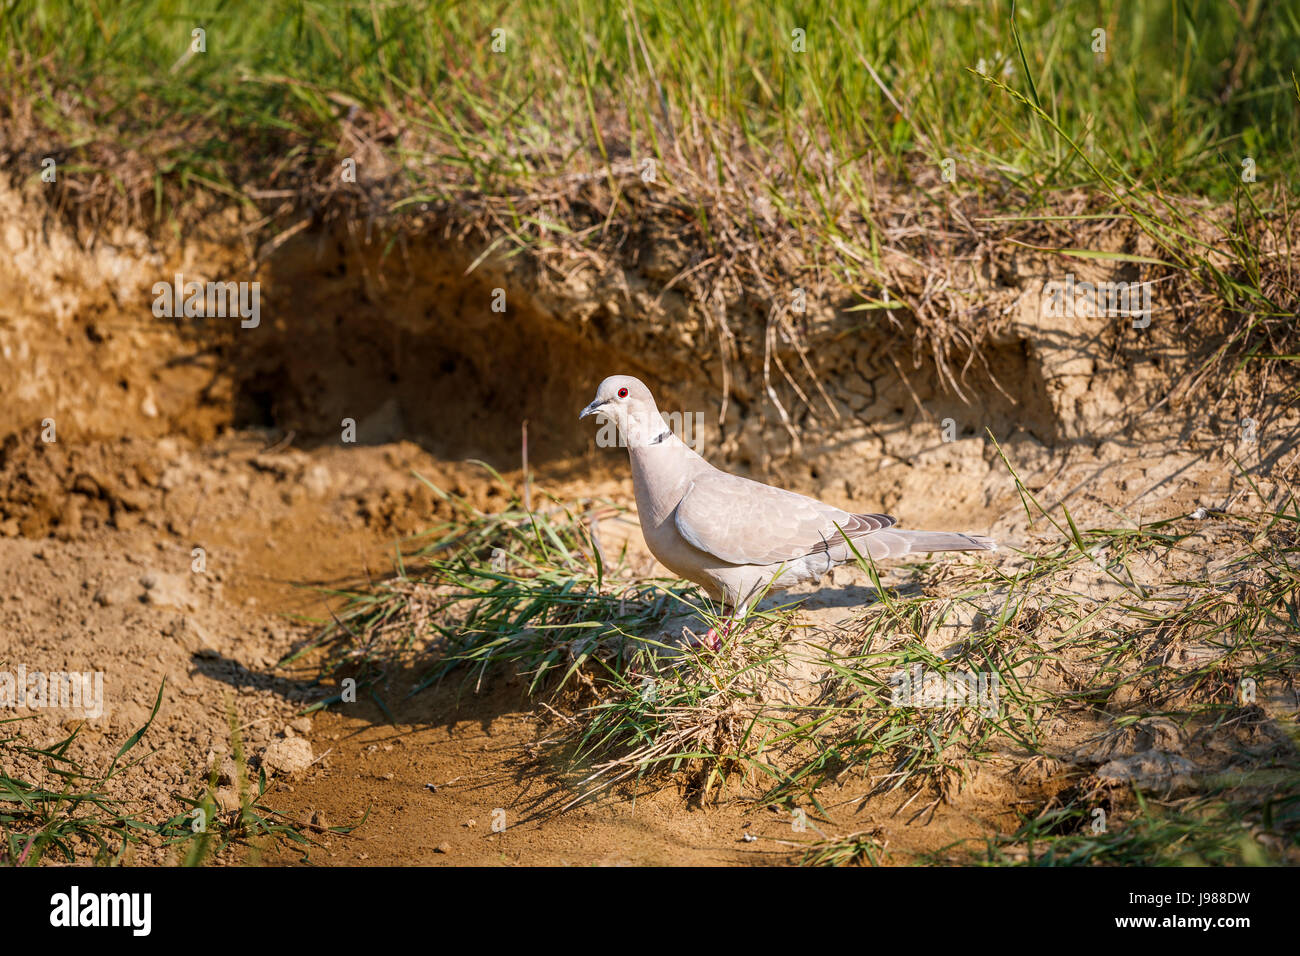 Eurasian collared dove (Streptopelia decaocto), Koros-Maros National Park, Bekes County, Hungary, standing on a sandy bank Stock Photo